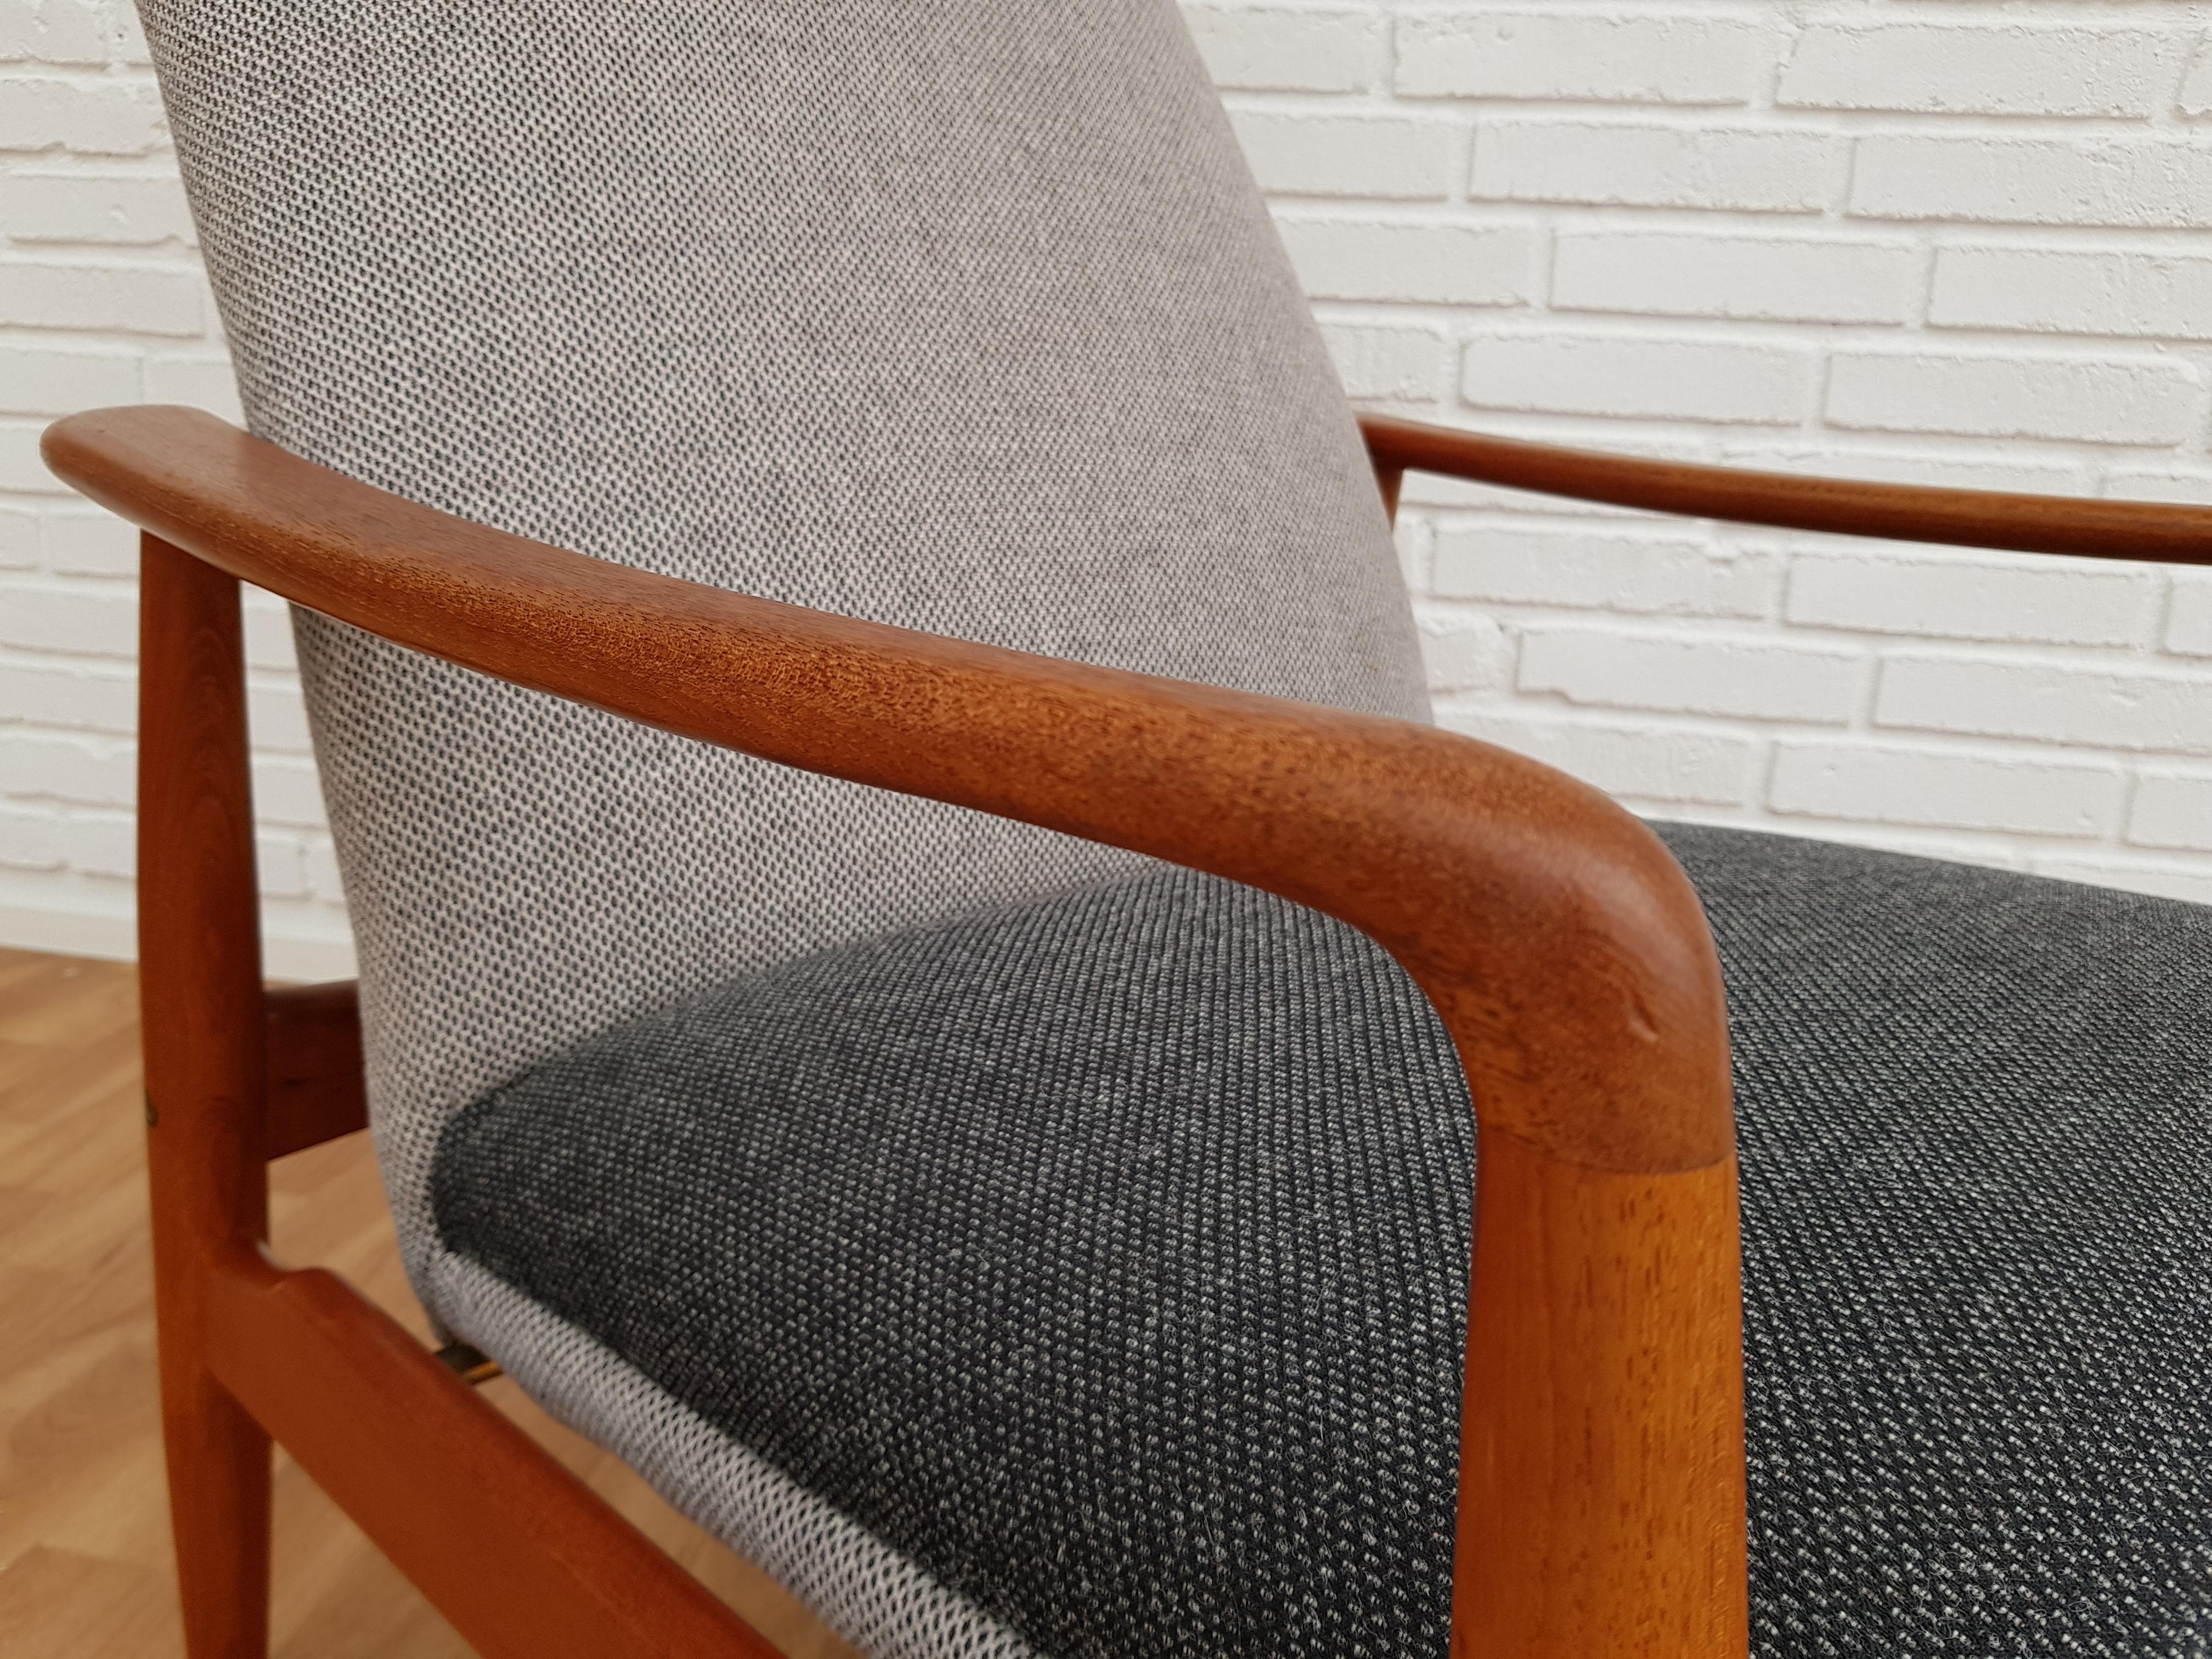 Lounge chair Søren J. Ladefoged & Søn. High-backed armchair, teak wood frame, adjustable two-step seat / back. Completely restored by craftsman, furniture upholsterer at Retro Møbler Galleri. Brand new padding. New reupholstered in quality wool